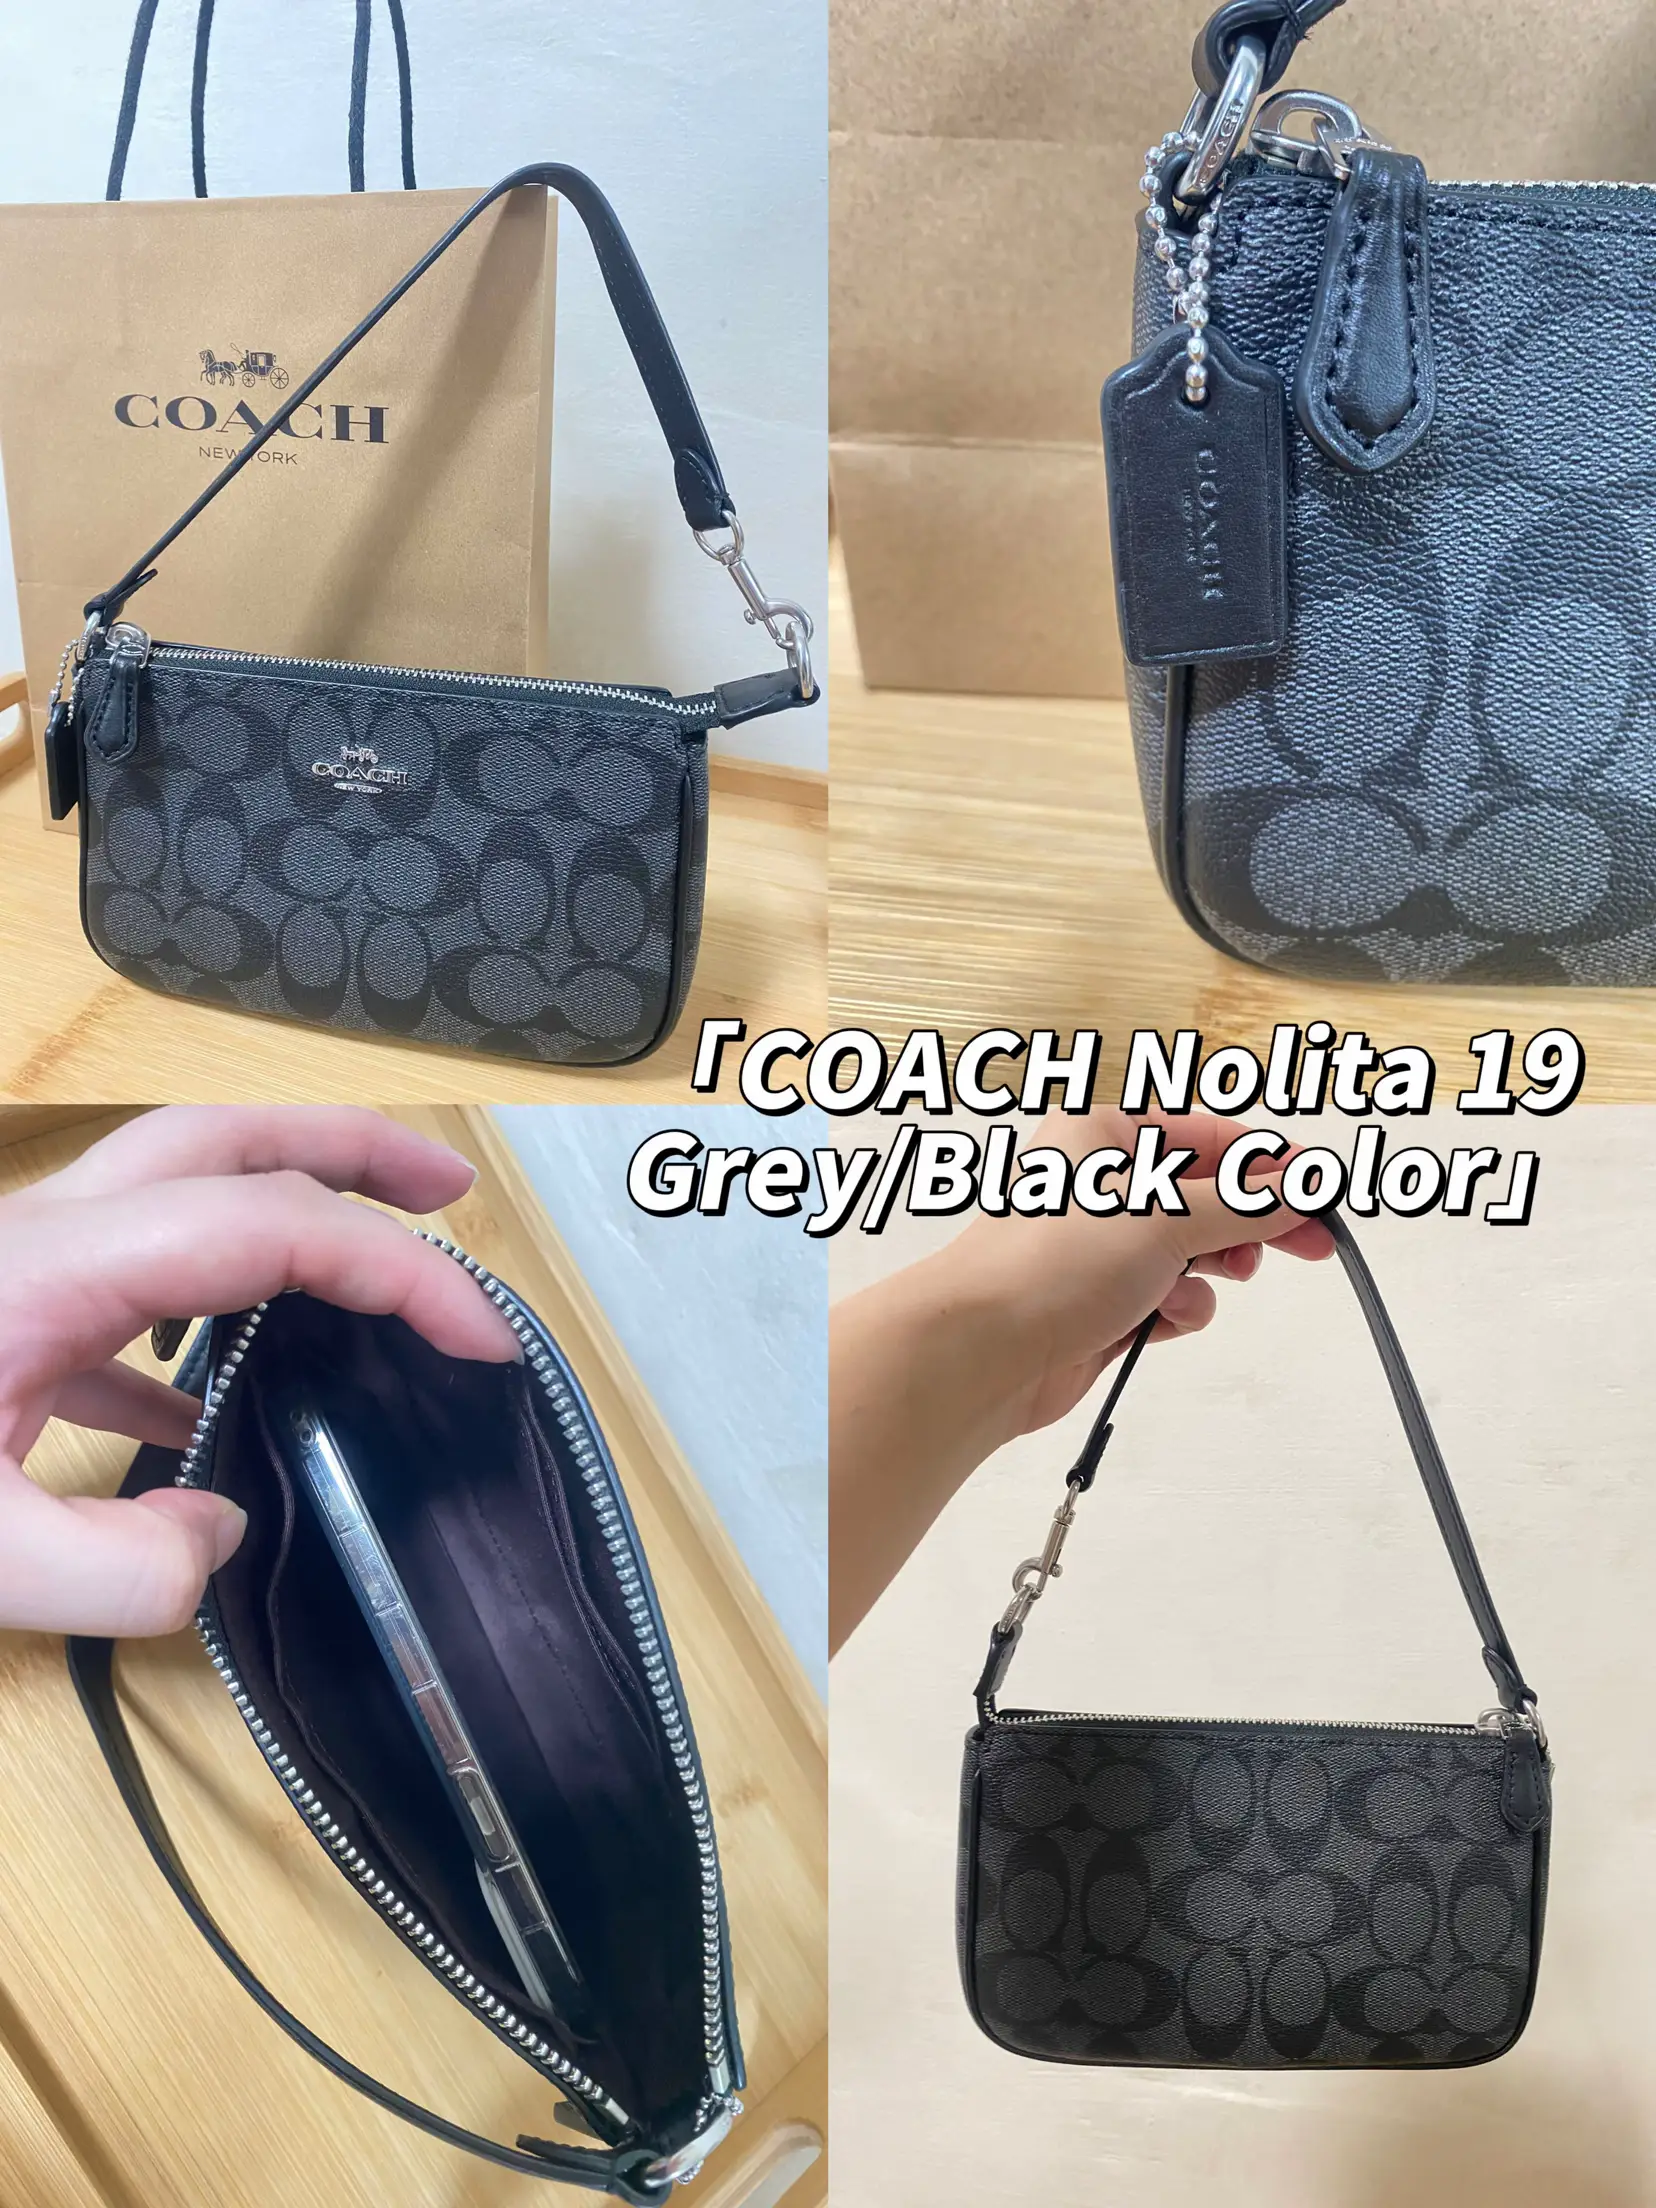 Turn Your COACH NOLITA 19 Into a Functional Shoulder Bag! 